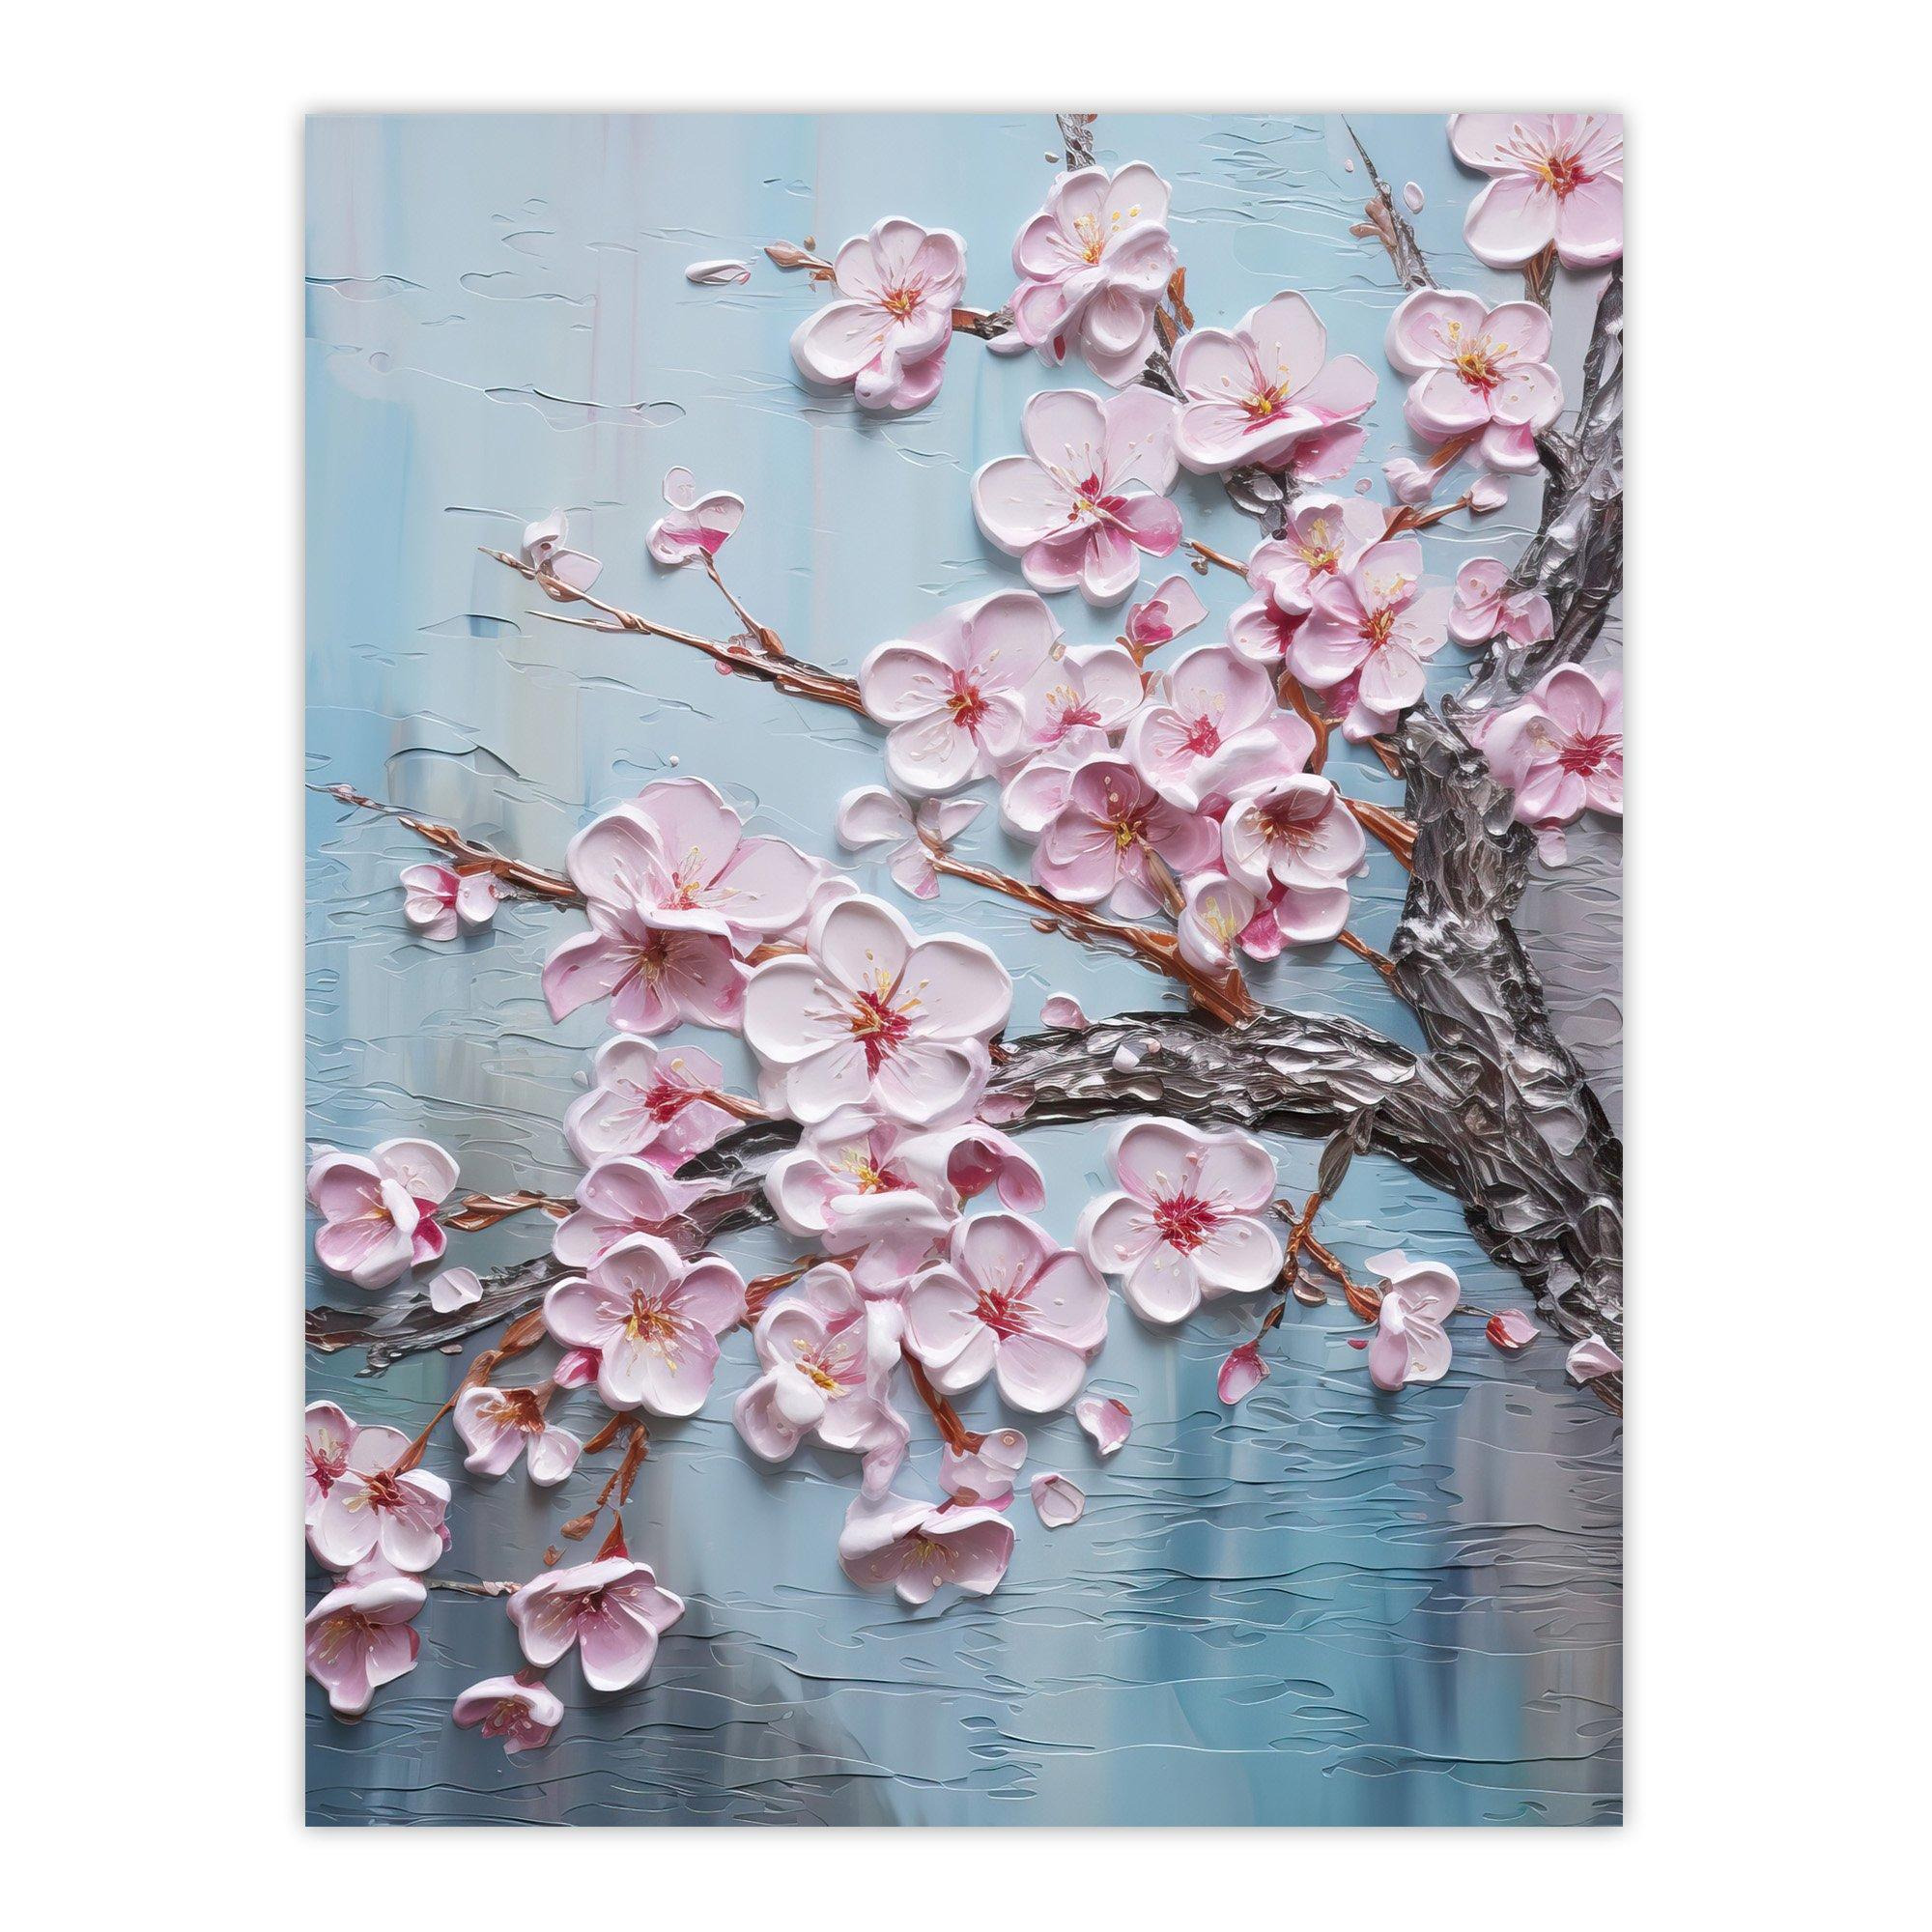 Cherry Blossom Splendor Delicate Elegant Pink And Soft Blue Oil Painting Unframed Wall Art Print Poster Home Decor Premium - image 1